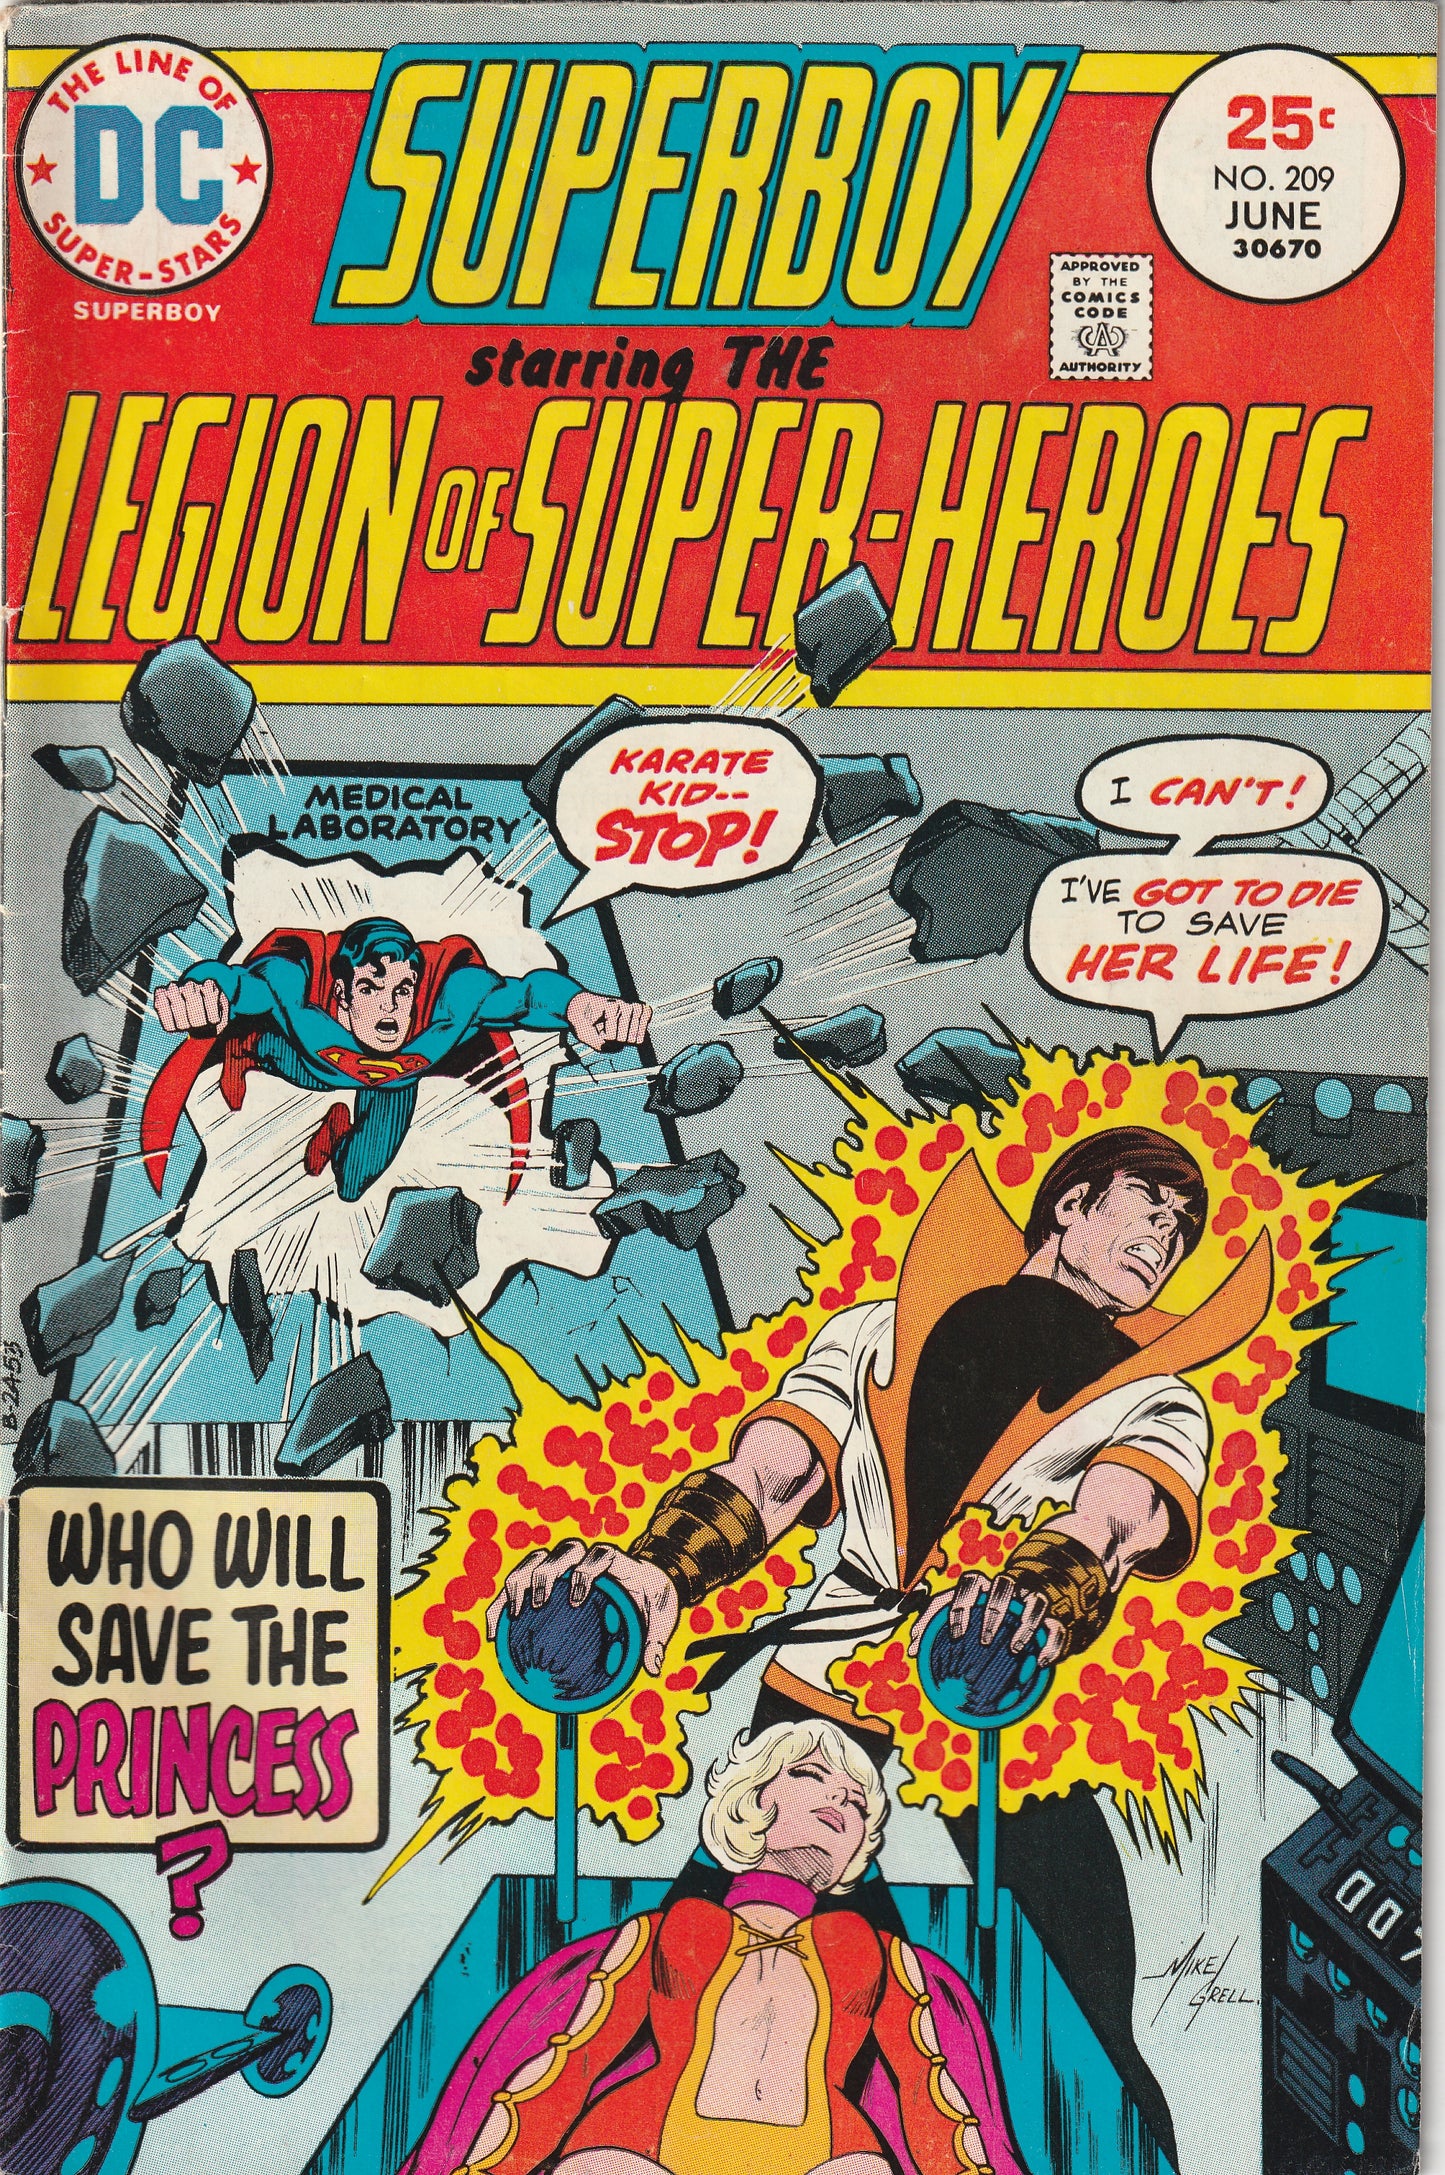 Superboy #209 (1975) - Starring the Legion of Super-Heroes - Karate Kid gets new costume